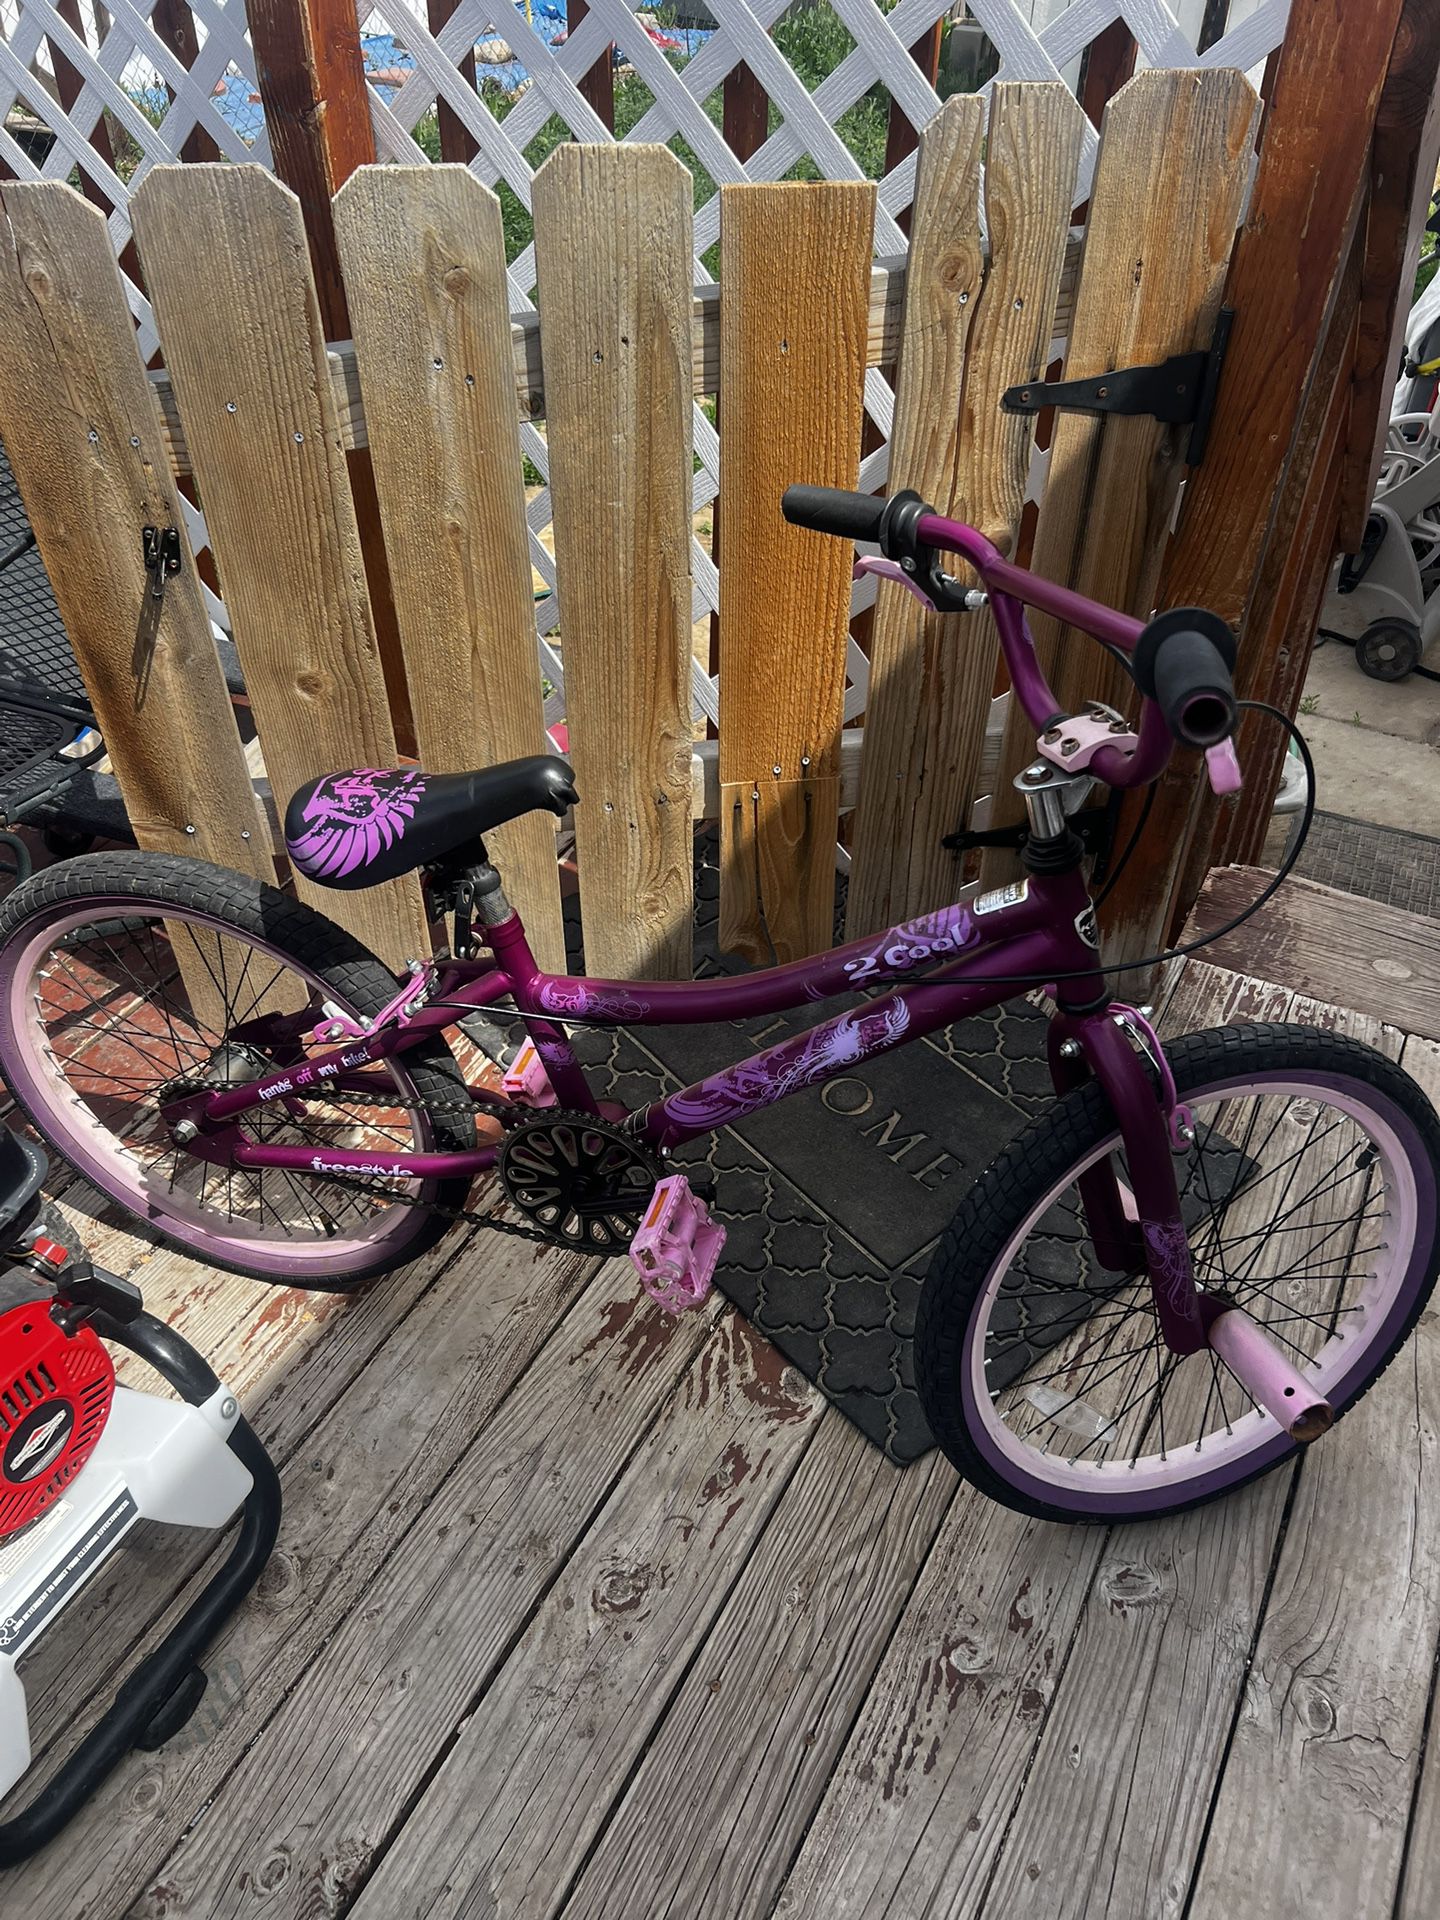 Purple/pink Kids Bike 